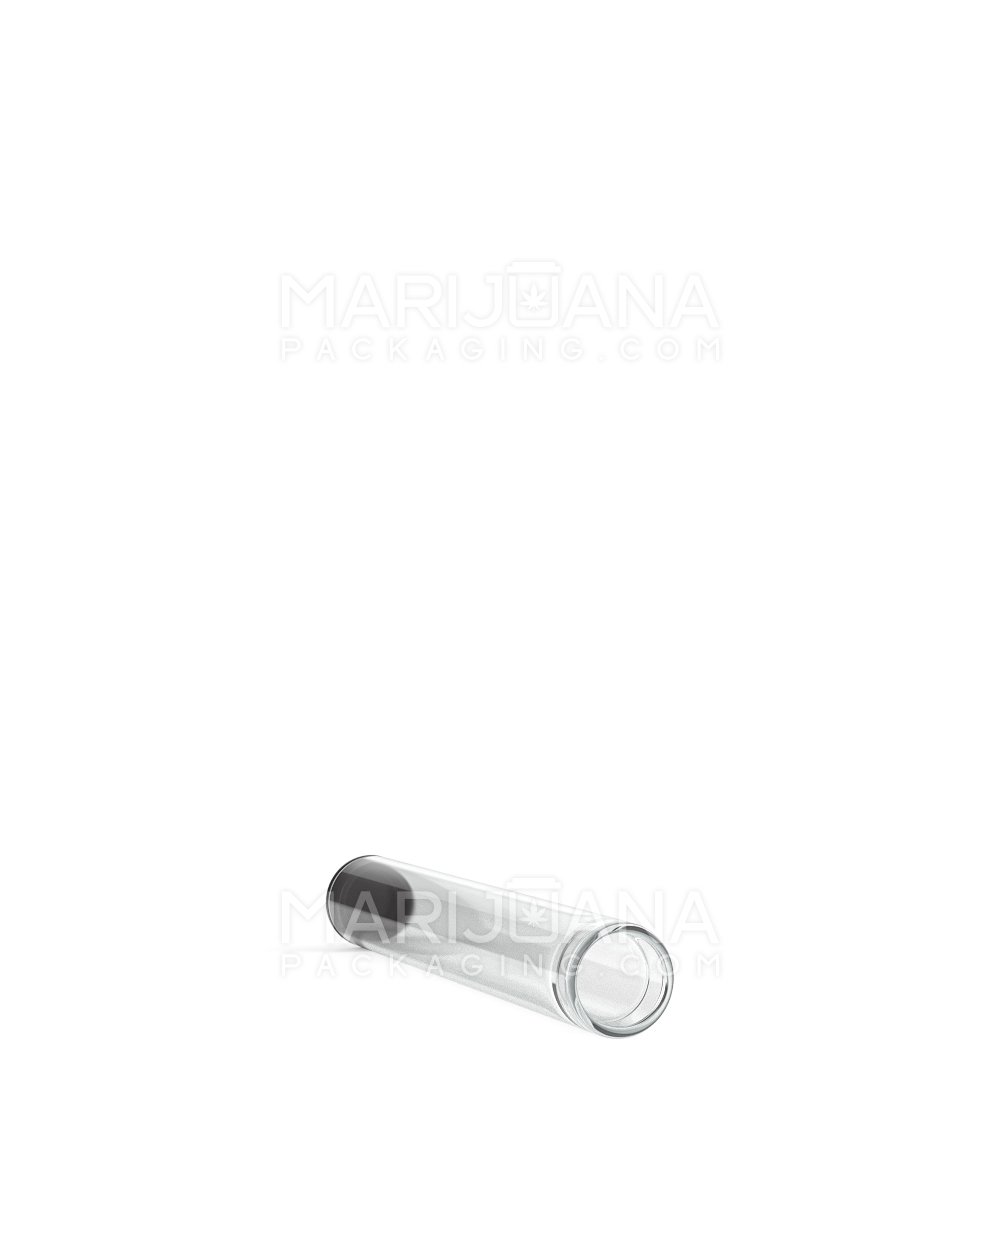 Buttonless Vape Cartridge Tube w/ Black Cap | 86mm - Clear Plastic - 500 Count - 5